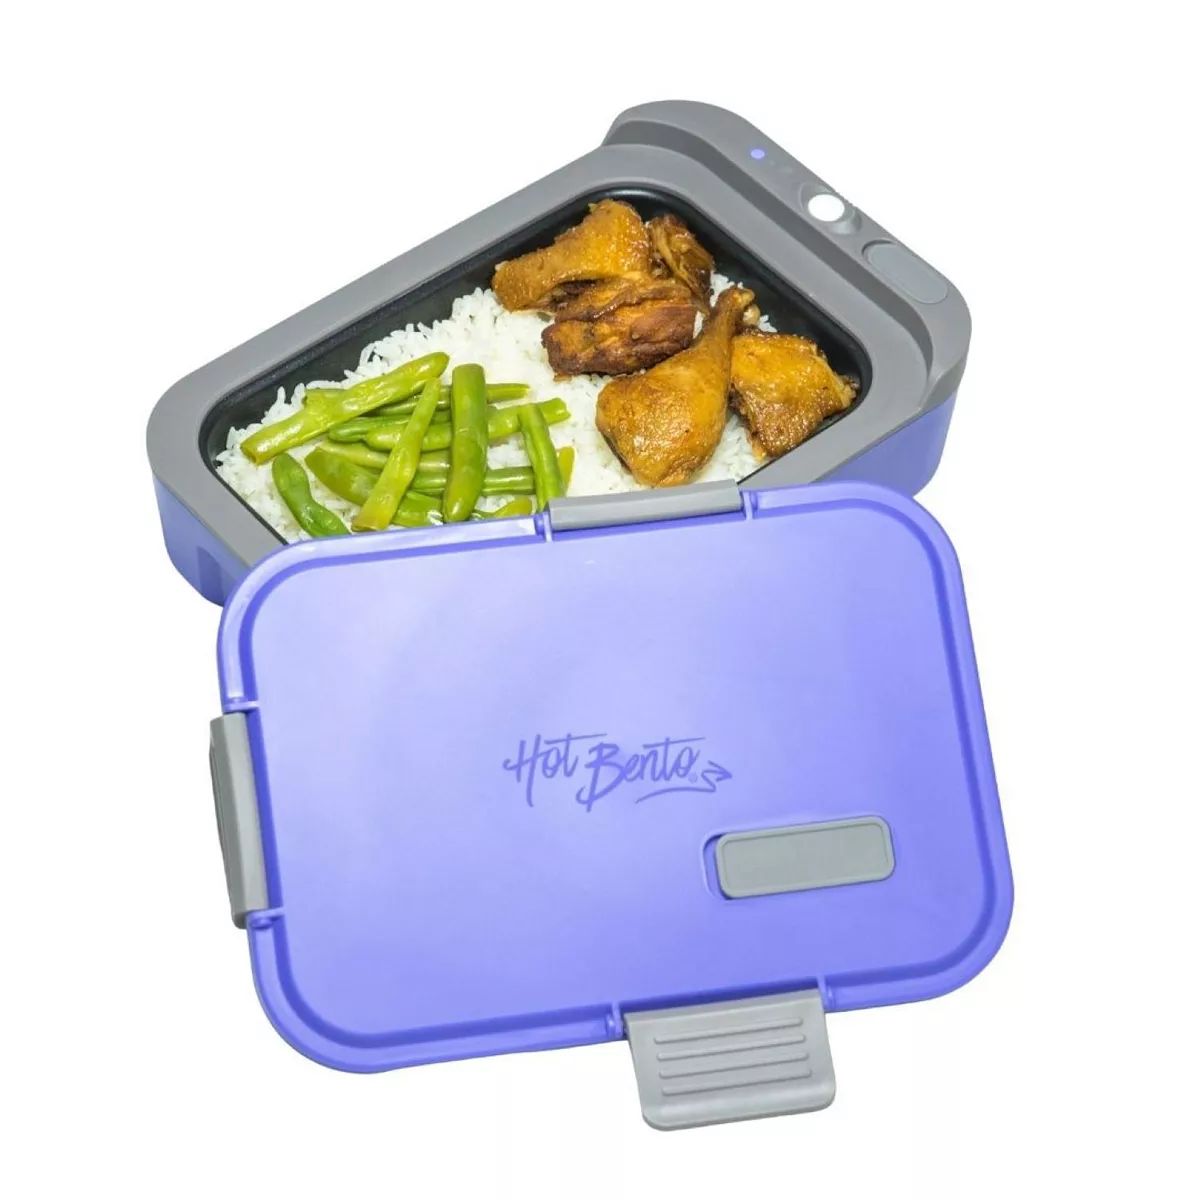 Hot Bento Self-Heating Lunch Box | Kohl's